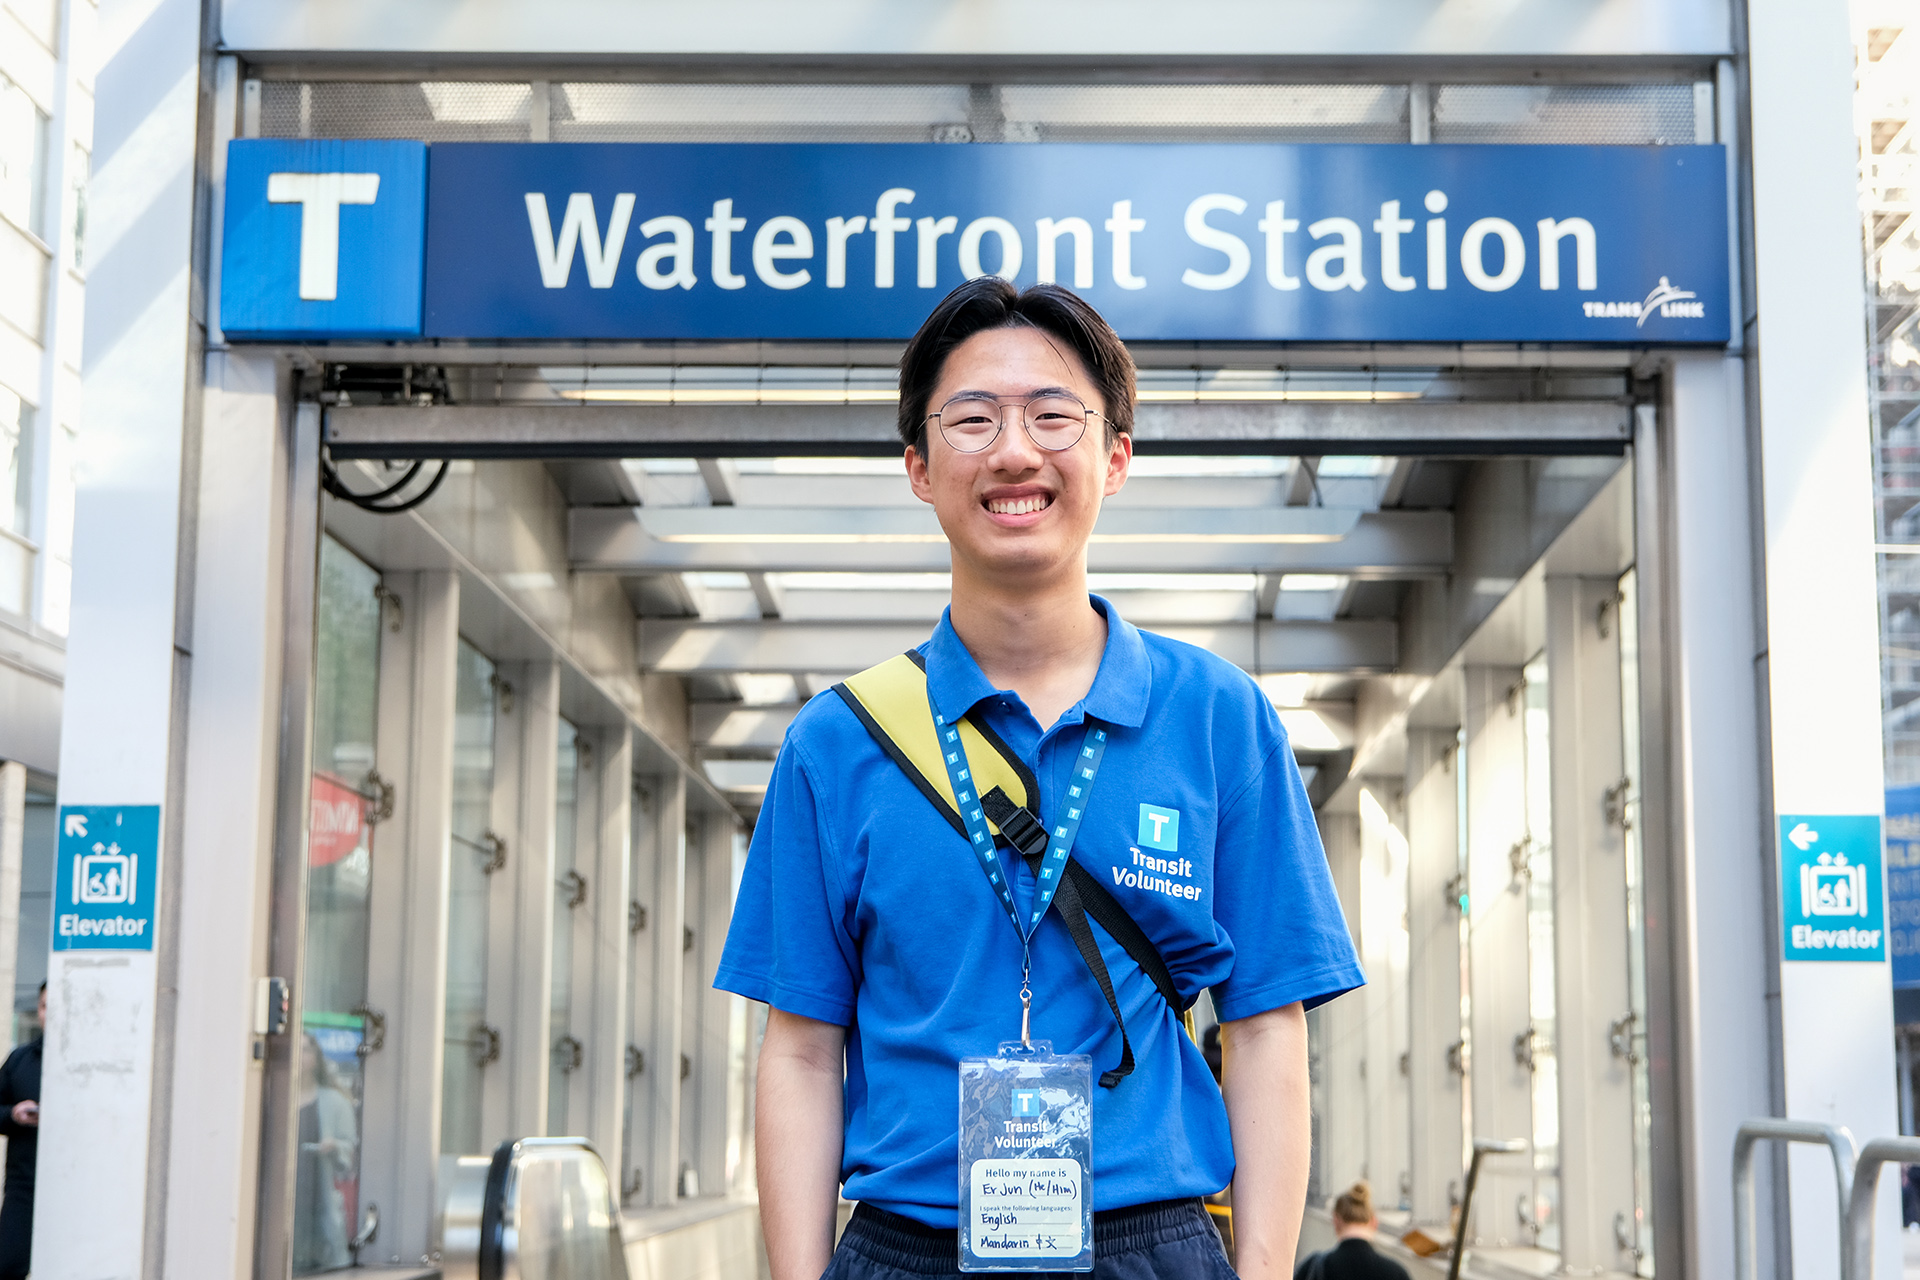 Community Transit Volunteer Er Jun Ma standing behind a Waterfront Station entrance